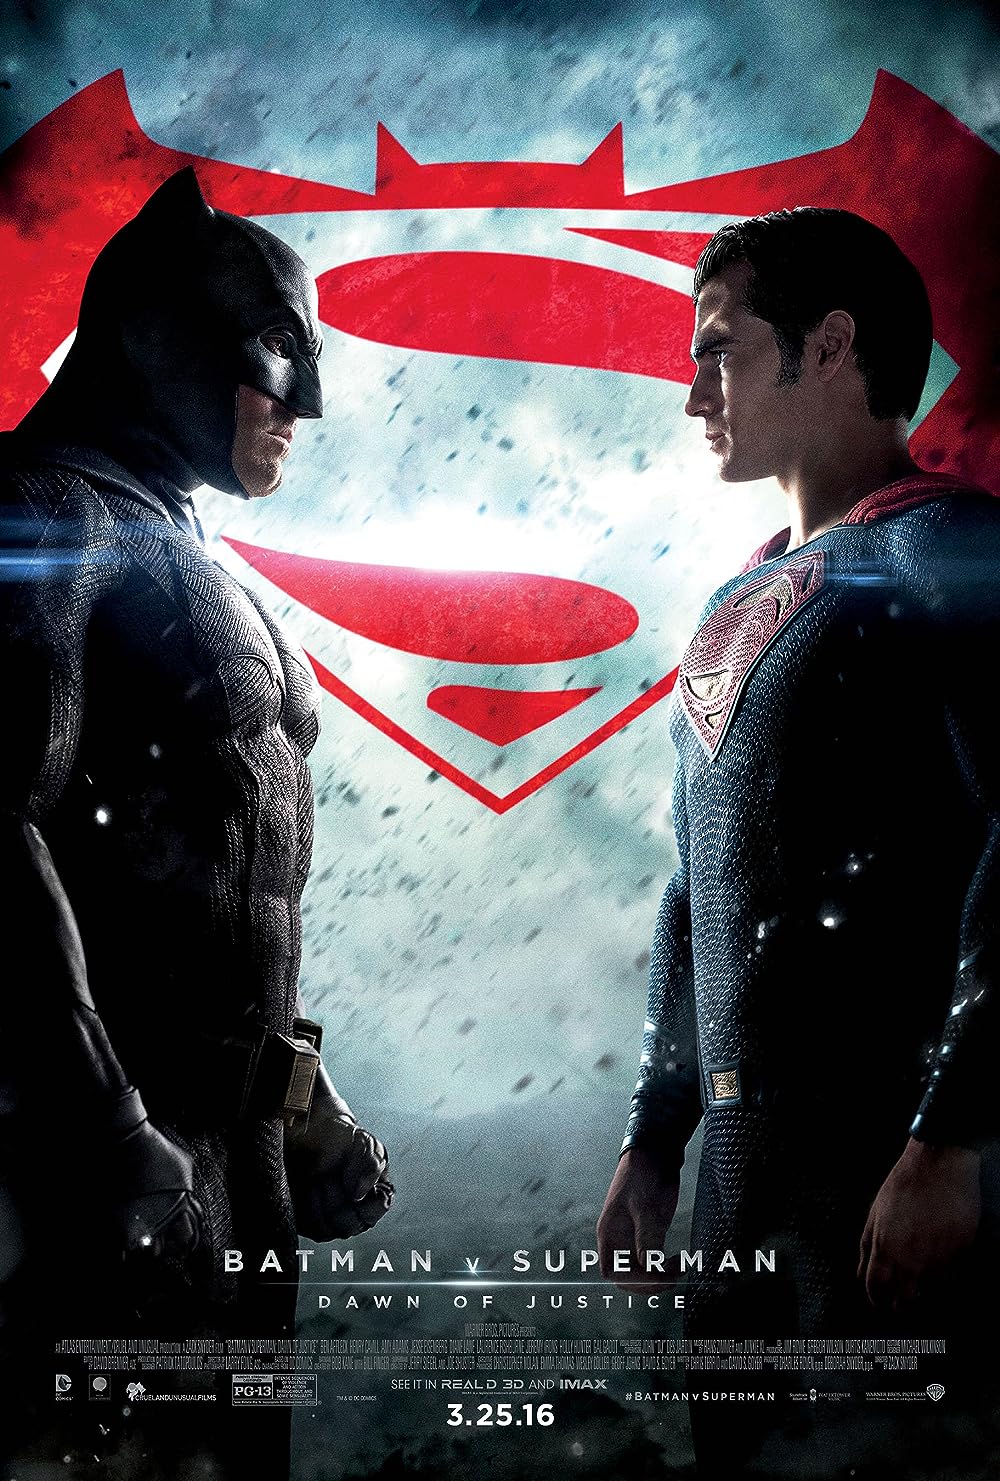 Batman v Superman: Dawn of Justice- DCEU Movies in order